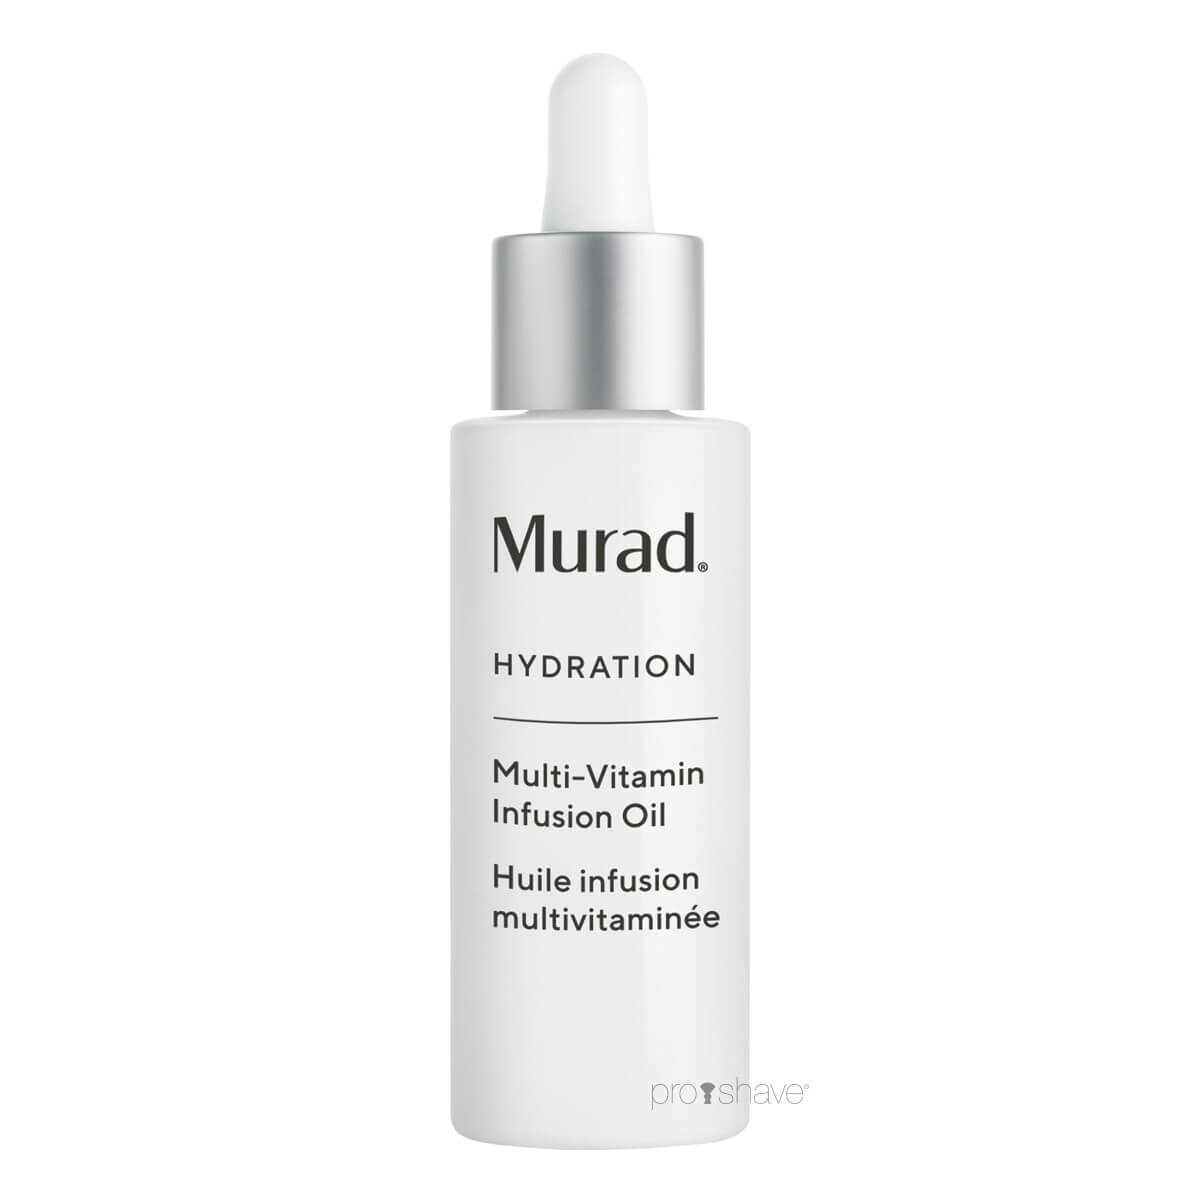 Billede af Murad Multi-Vitamin Infusion Oil, 30 ml.